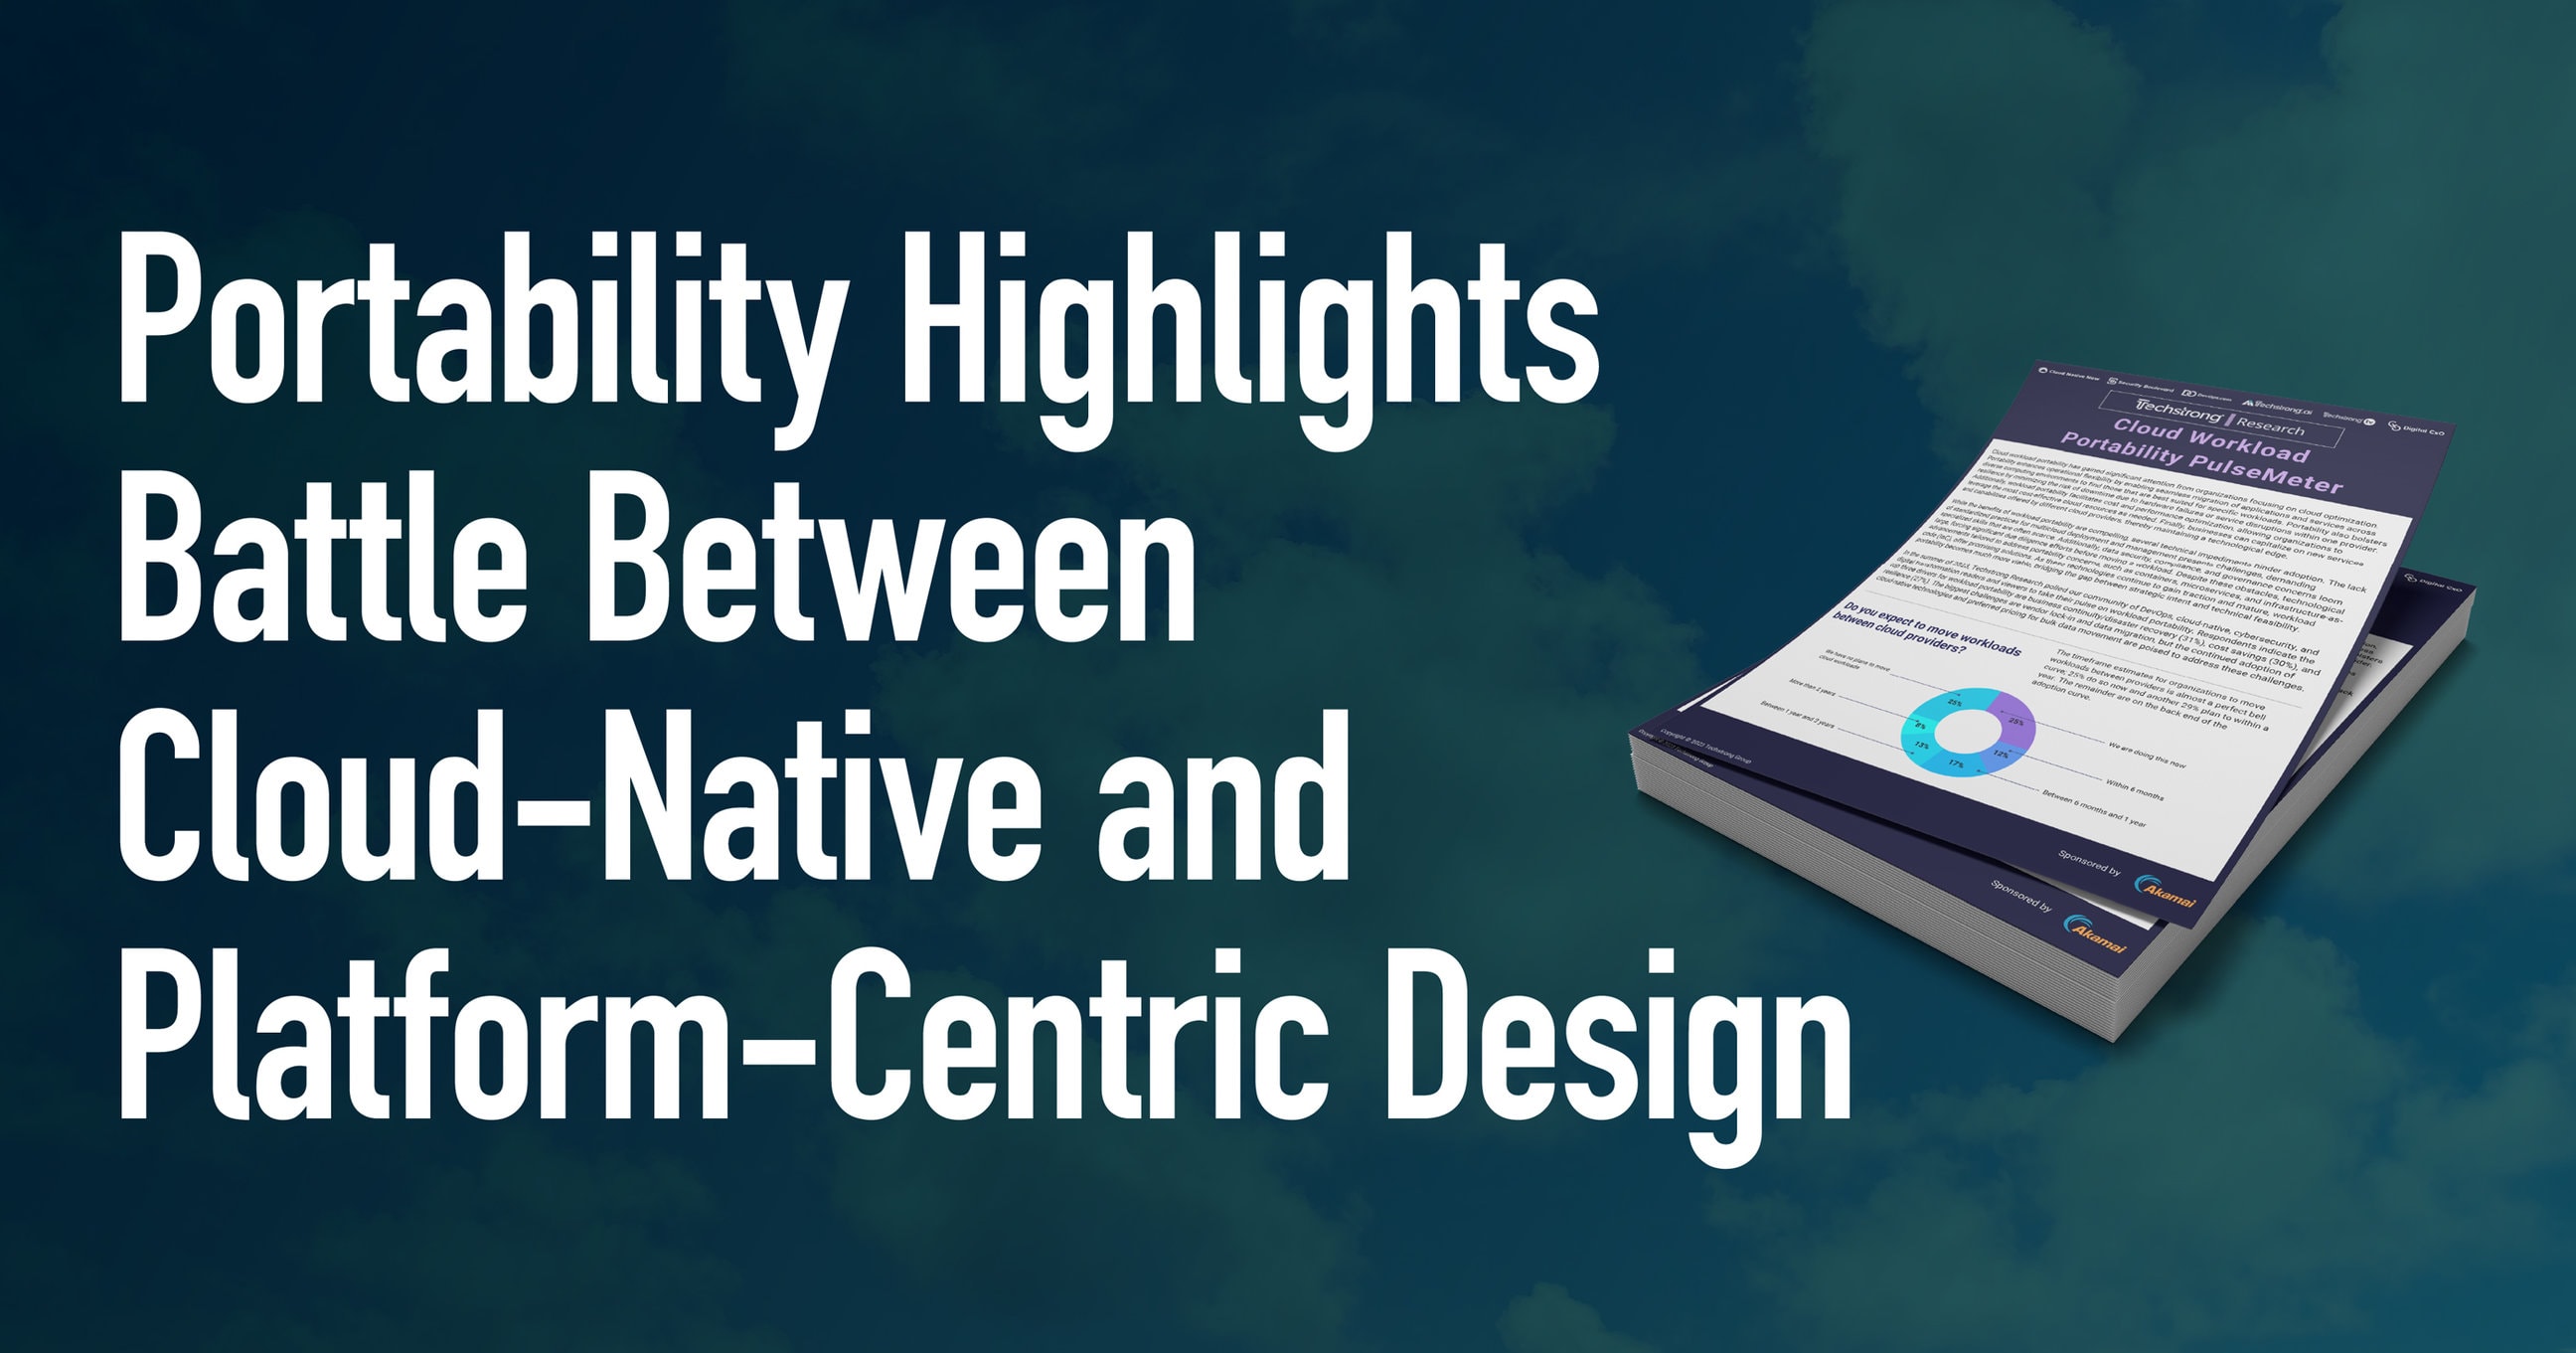 Portability Highlights Battle Between Cloud-Native and Platform-Centric Design